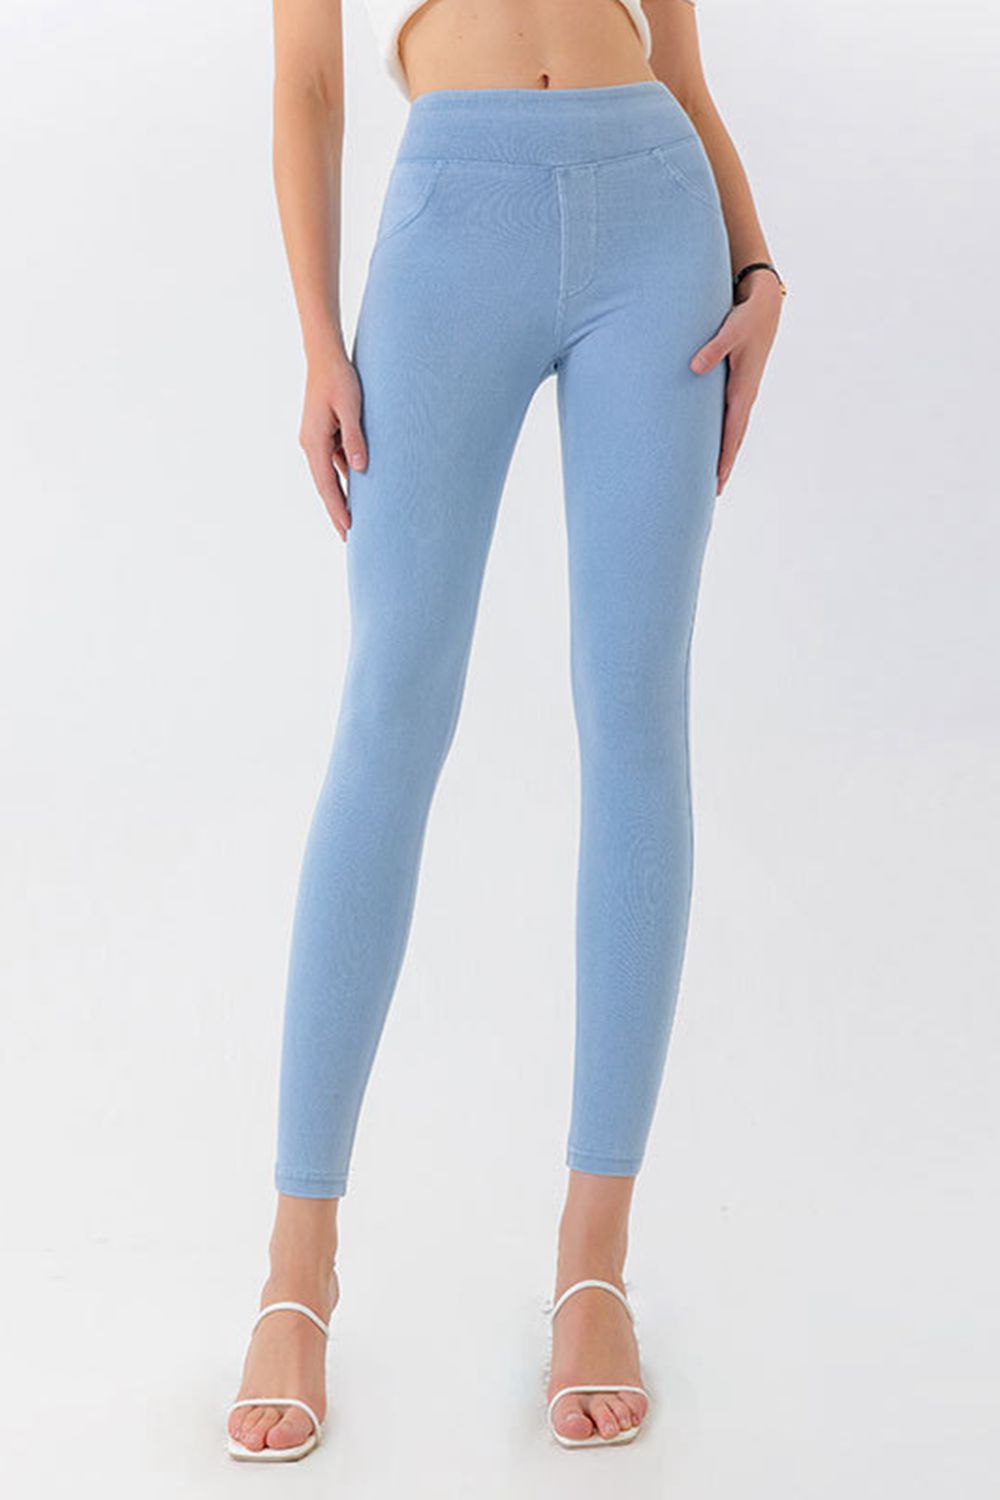 GYPSY-High Waist SImple Skinny Jeans